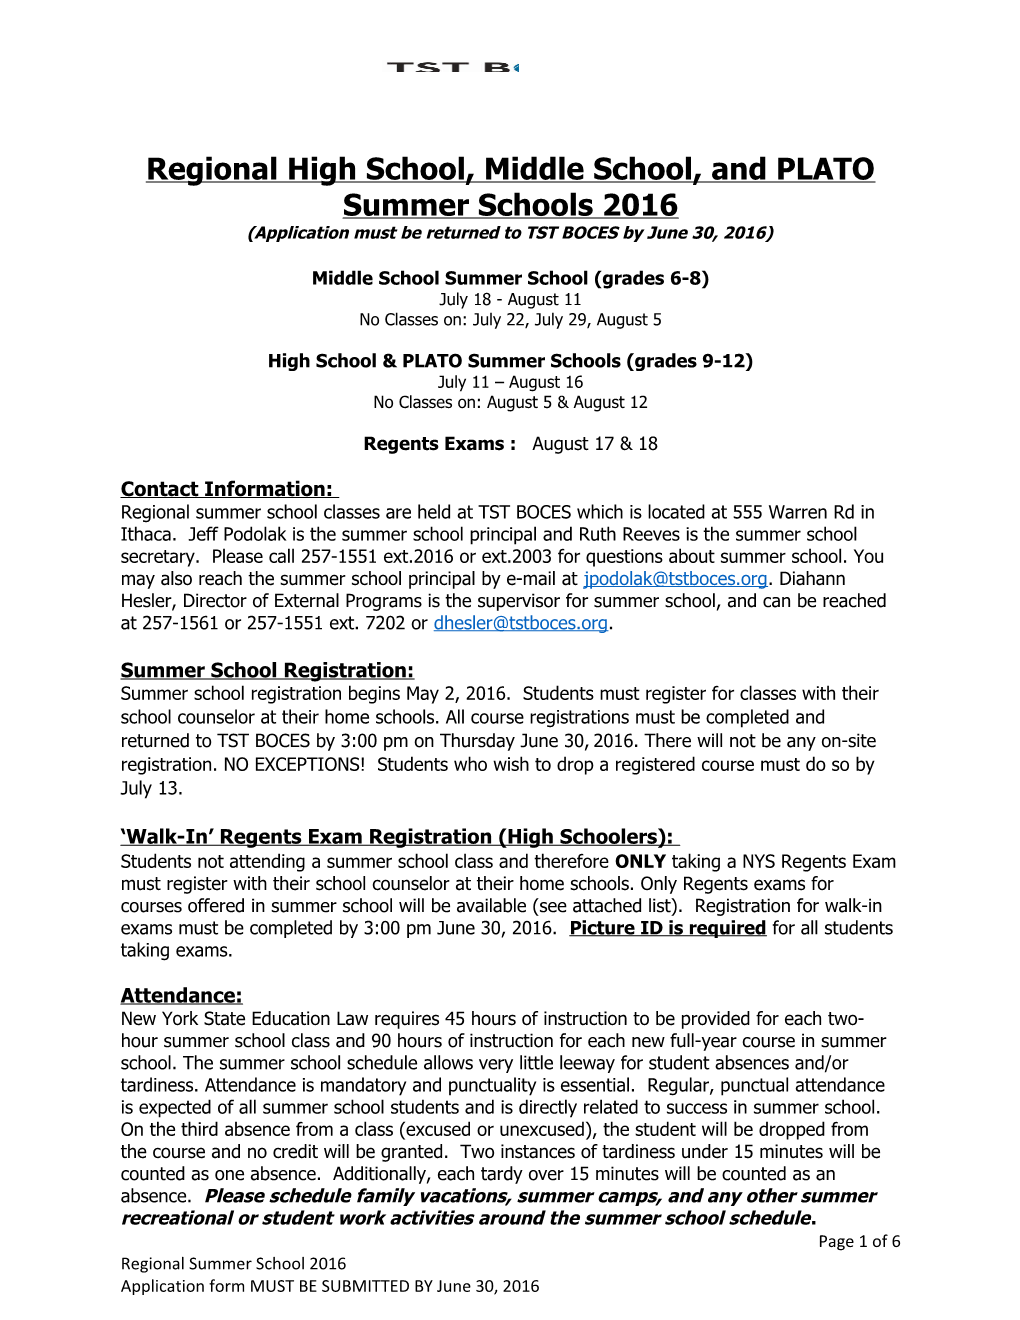 Regional High School, Middle School, and PLATO Summer Schools 2016